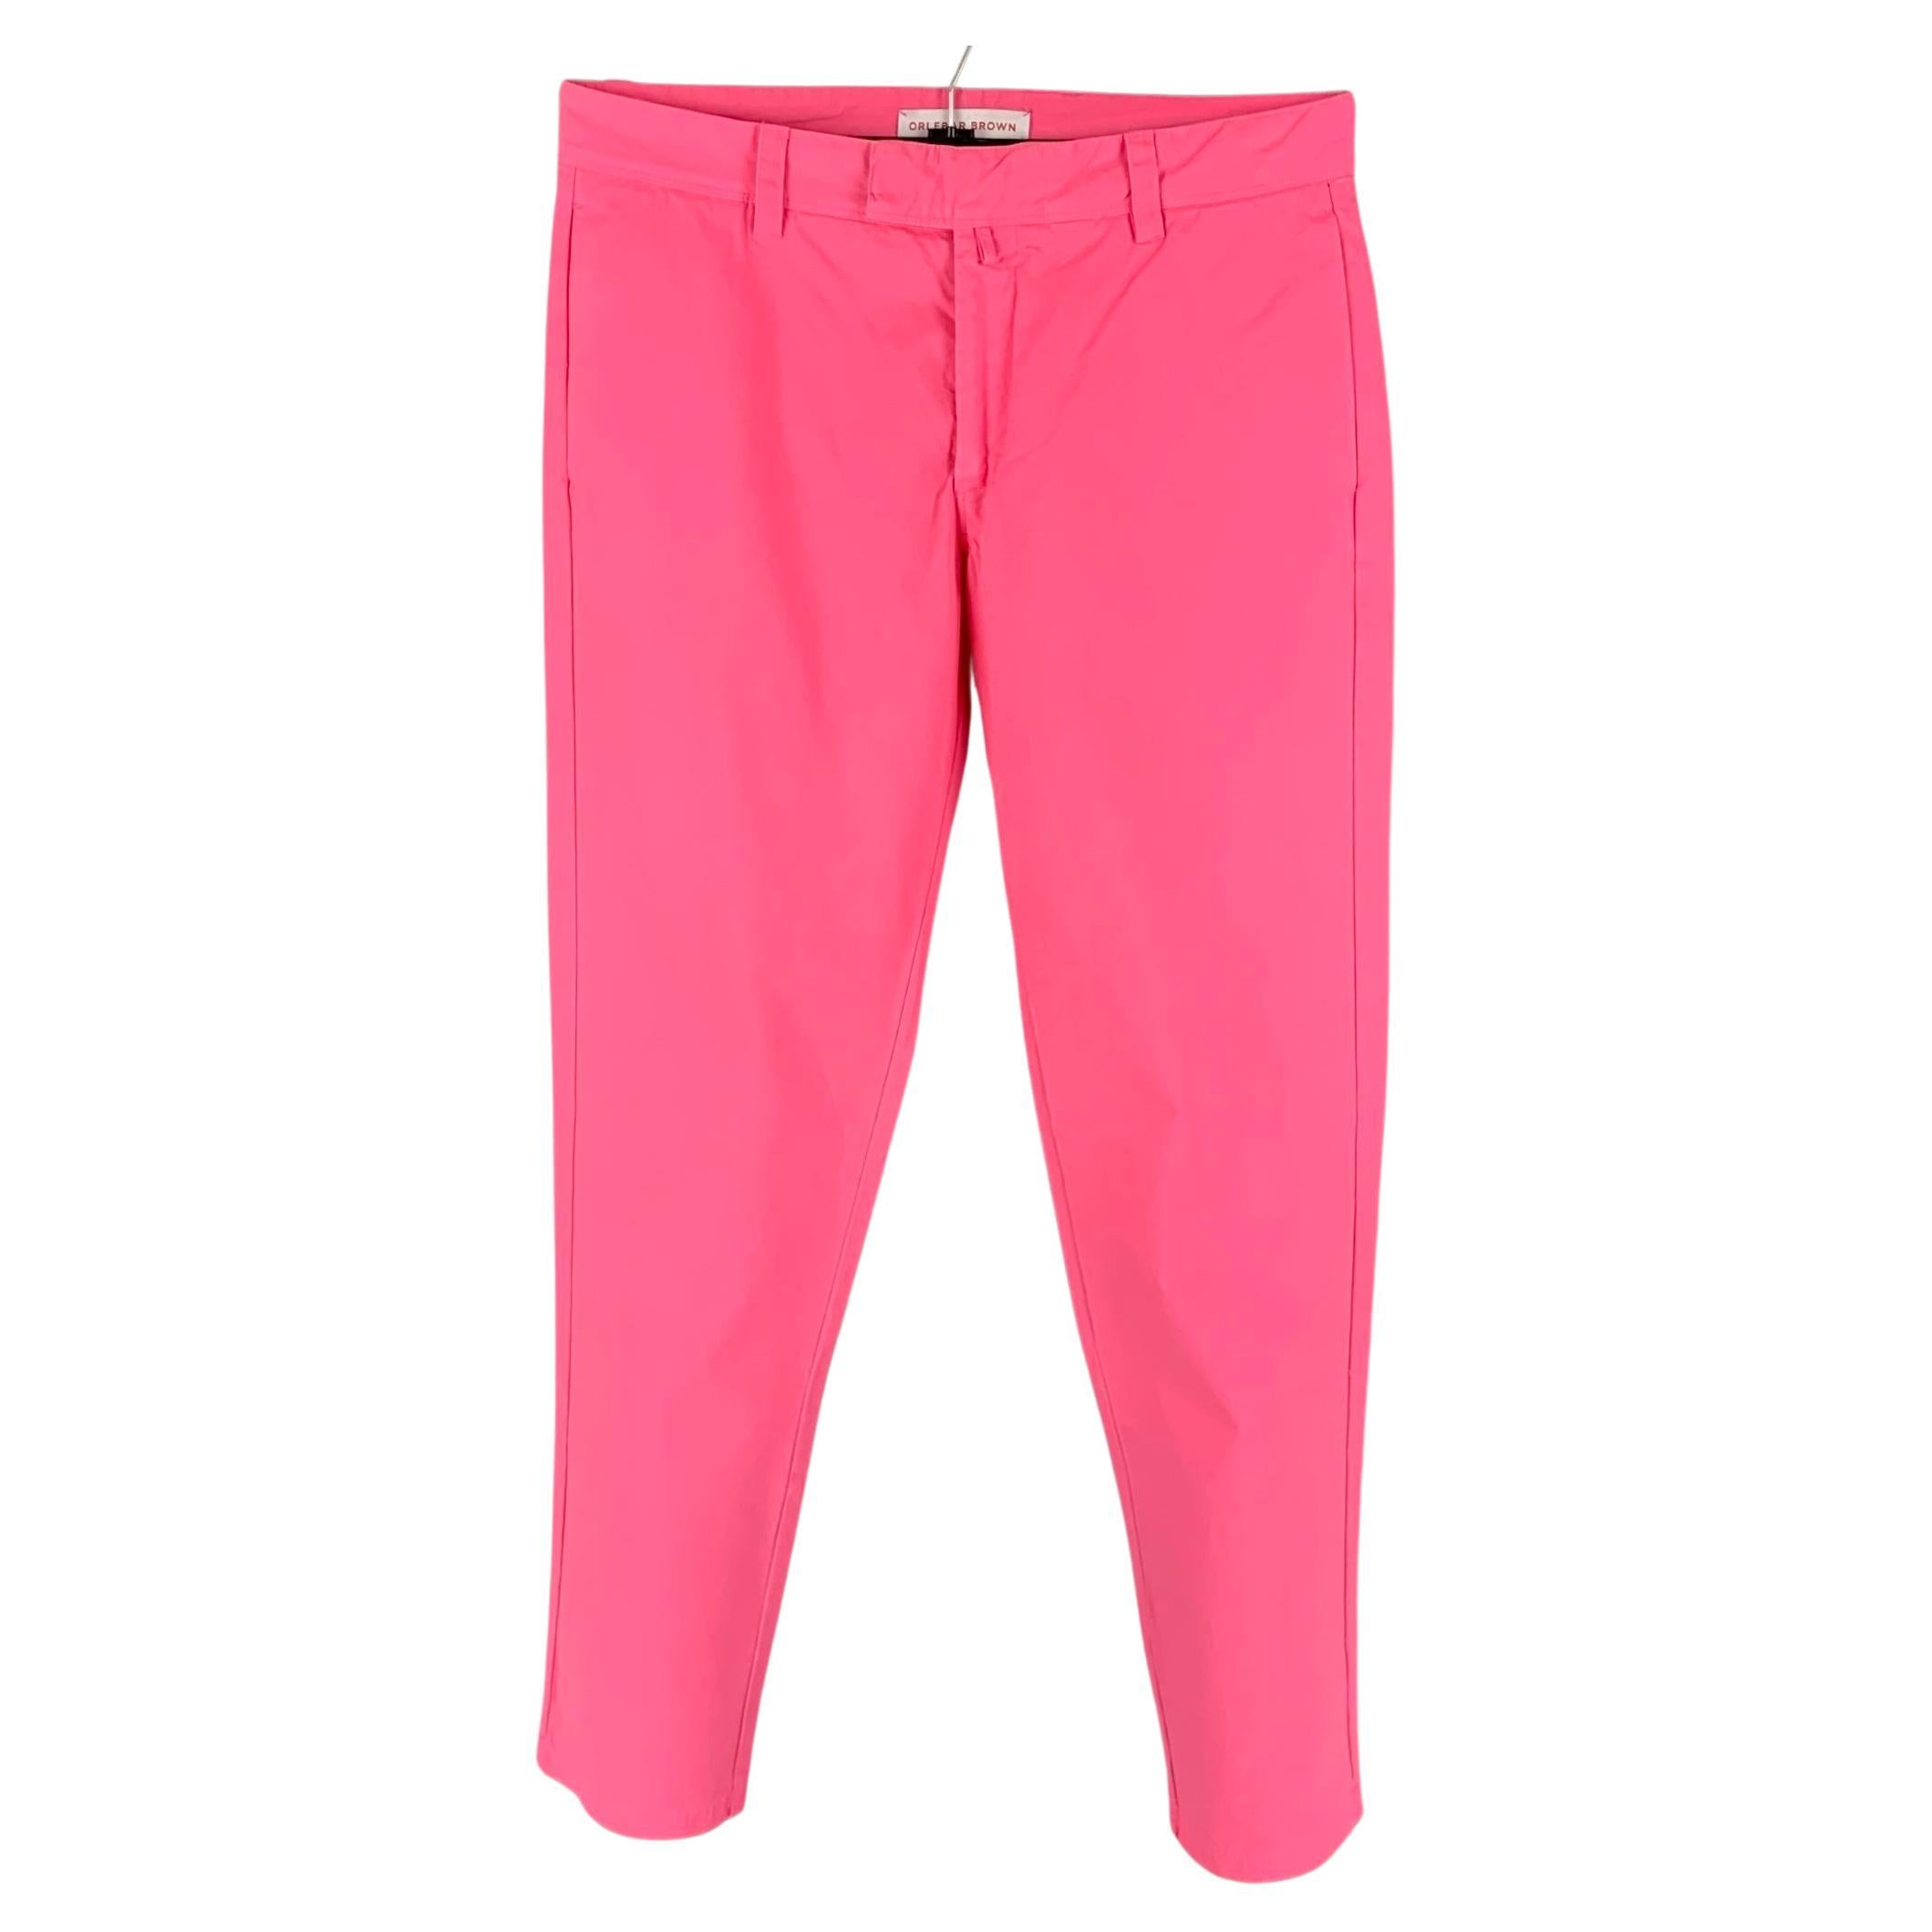 ORLEBAR BROWN Size 32 Pink Cotton Zip Dress Pants